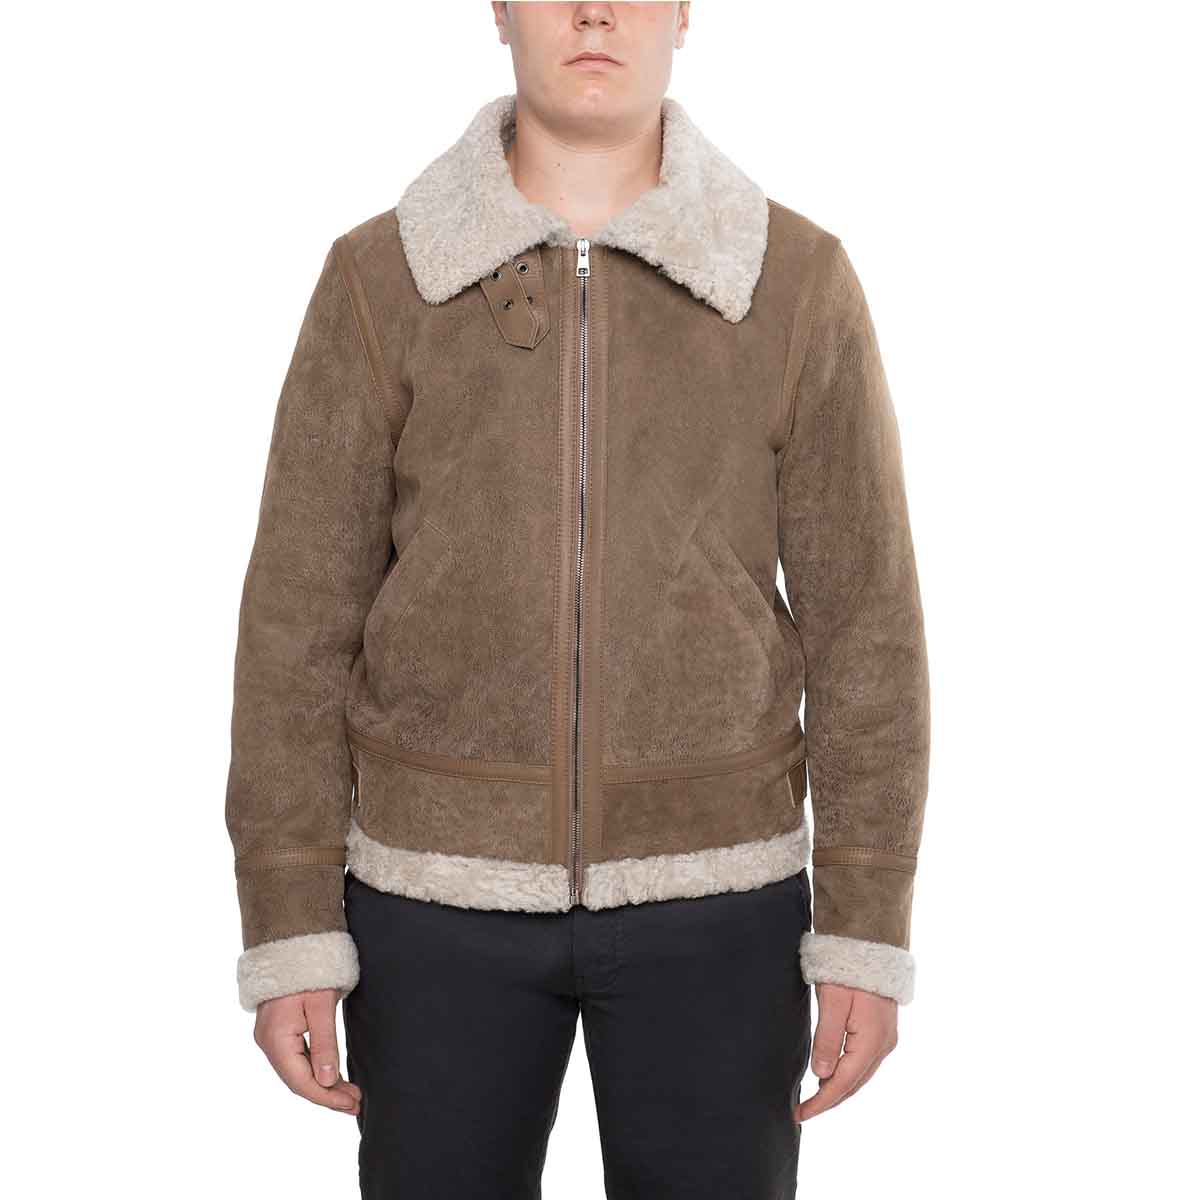 Men's brown sheepskin jacket